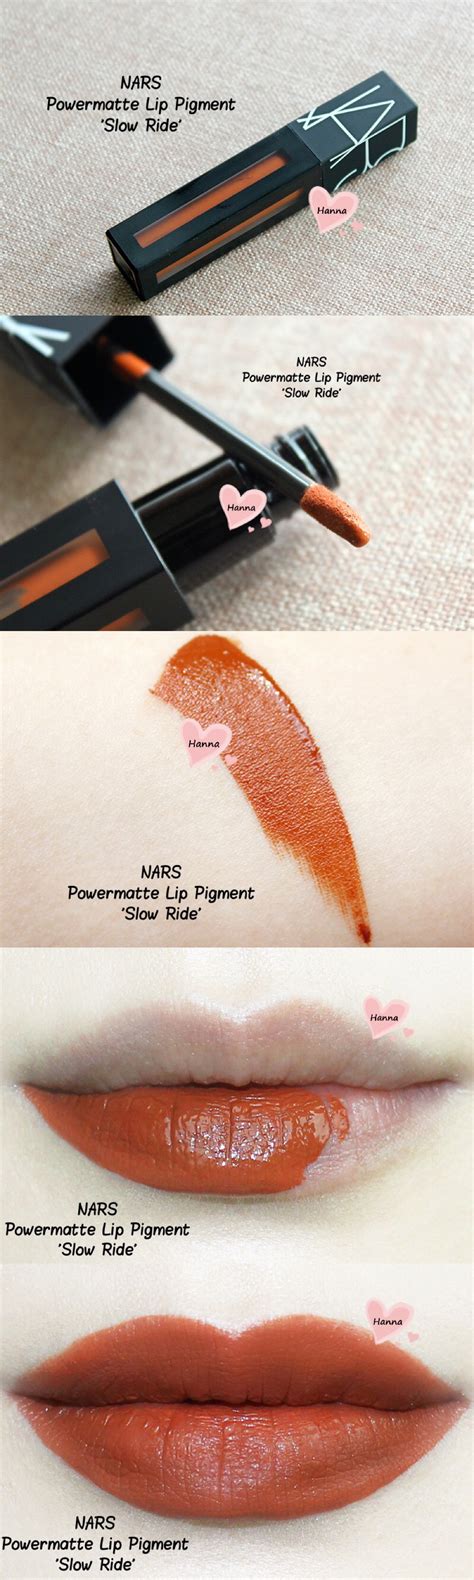 Nars Slow Ride Powermatte Lip Pigment Review Swatches Metallic My Xxx